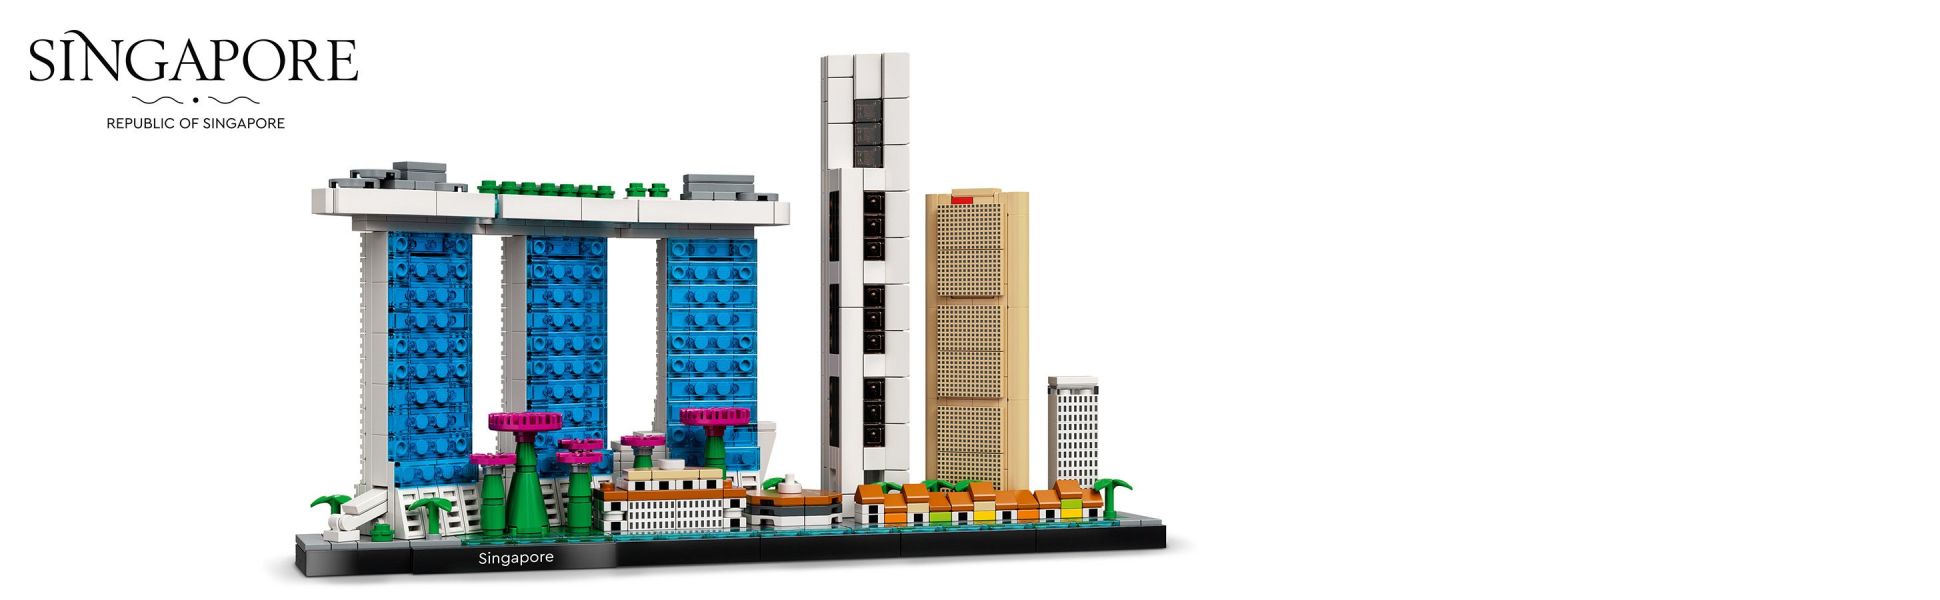 LEGO Architecture Singapore 21057 Skyline Collection Model